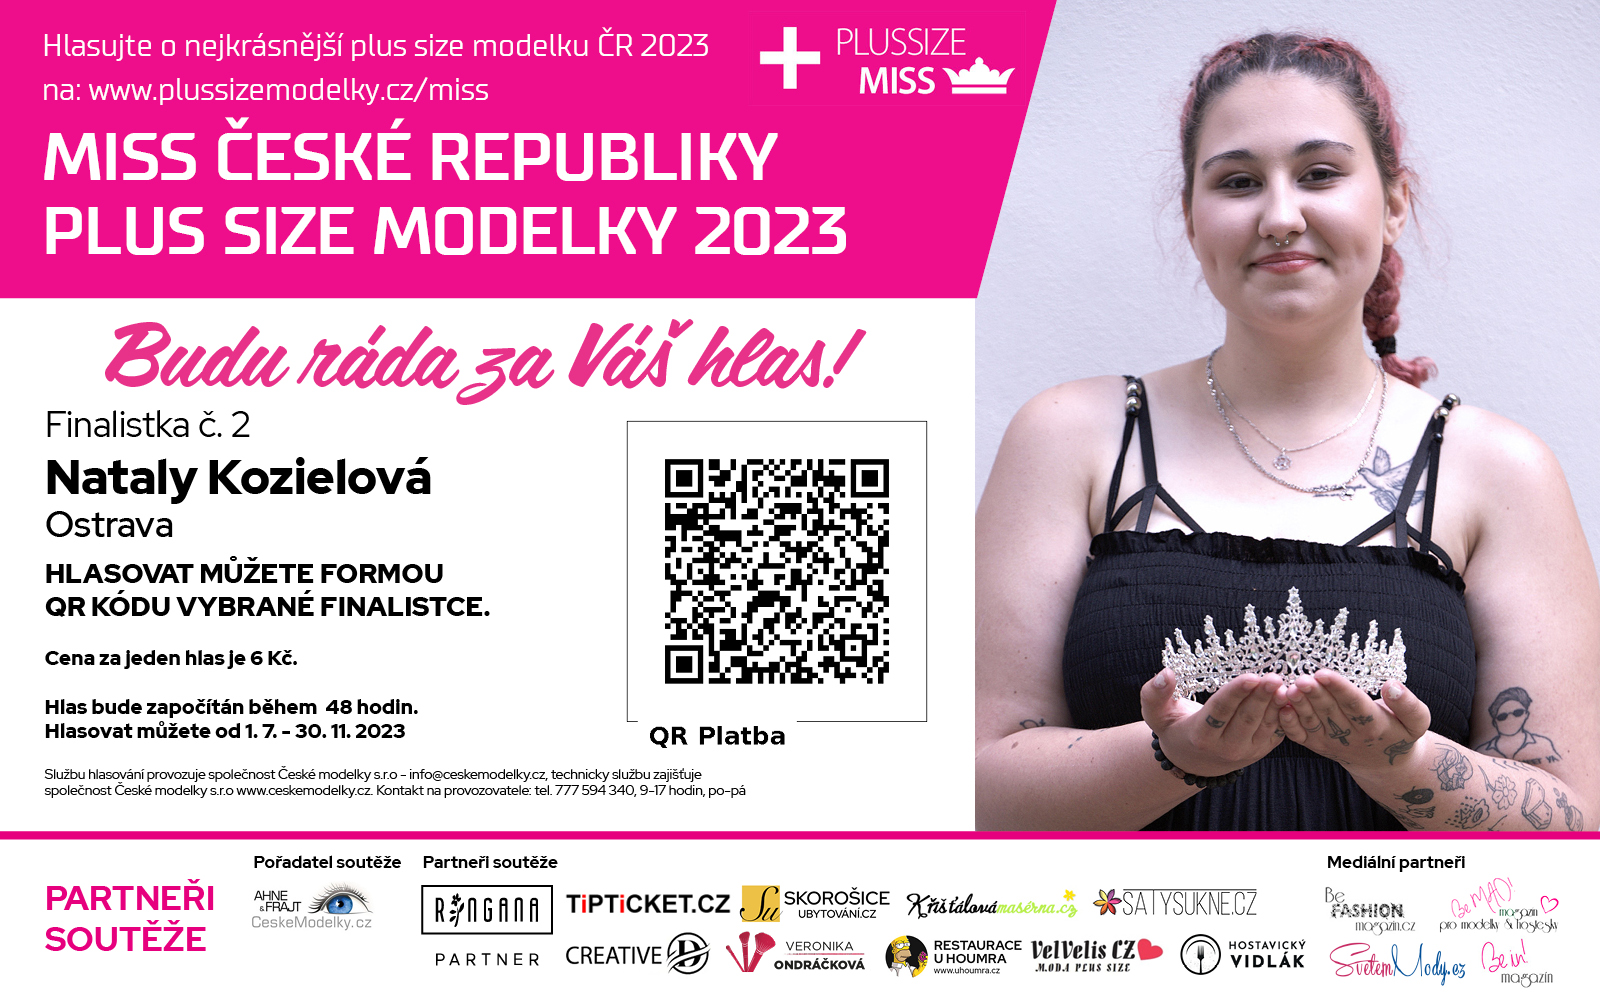 Nataly Kozielov finalistka .2 soute Miss Plus size modelky R 2023